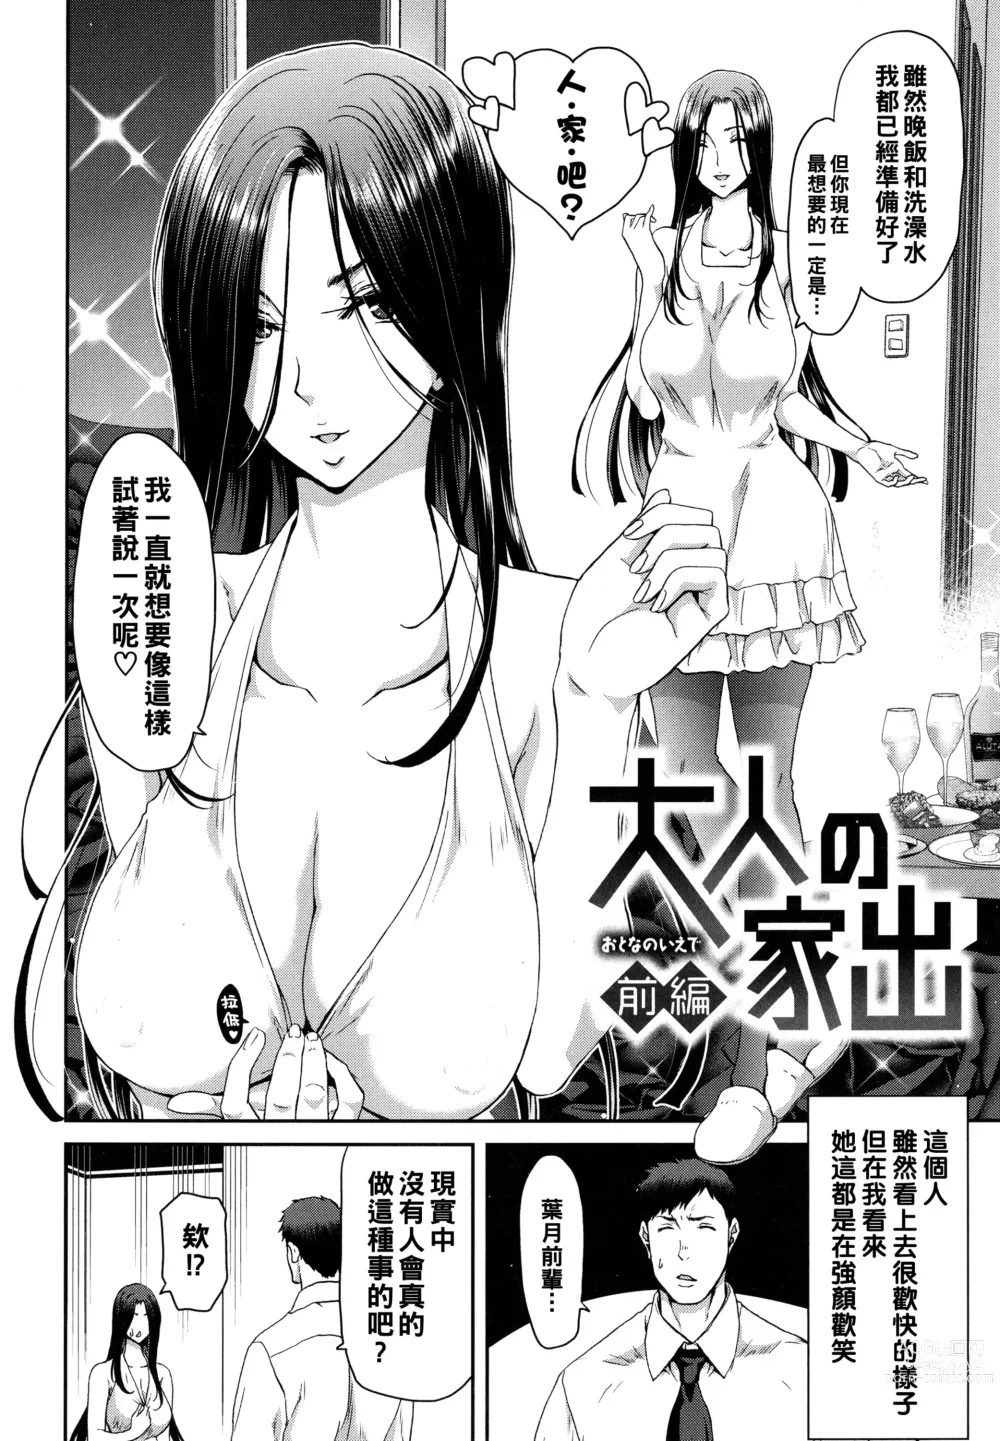 Page 6 of manga Iede Onna o Hirottara - When I picked up a runaway girl.